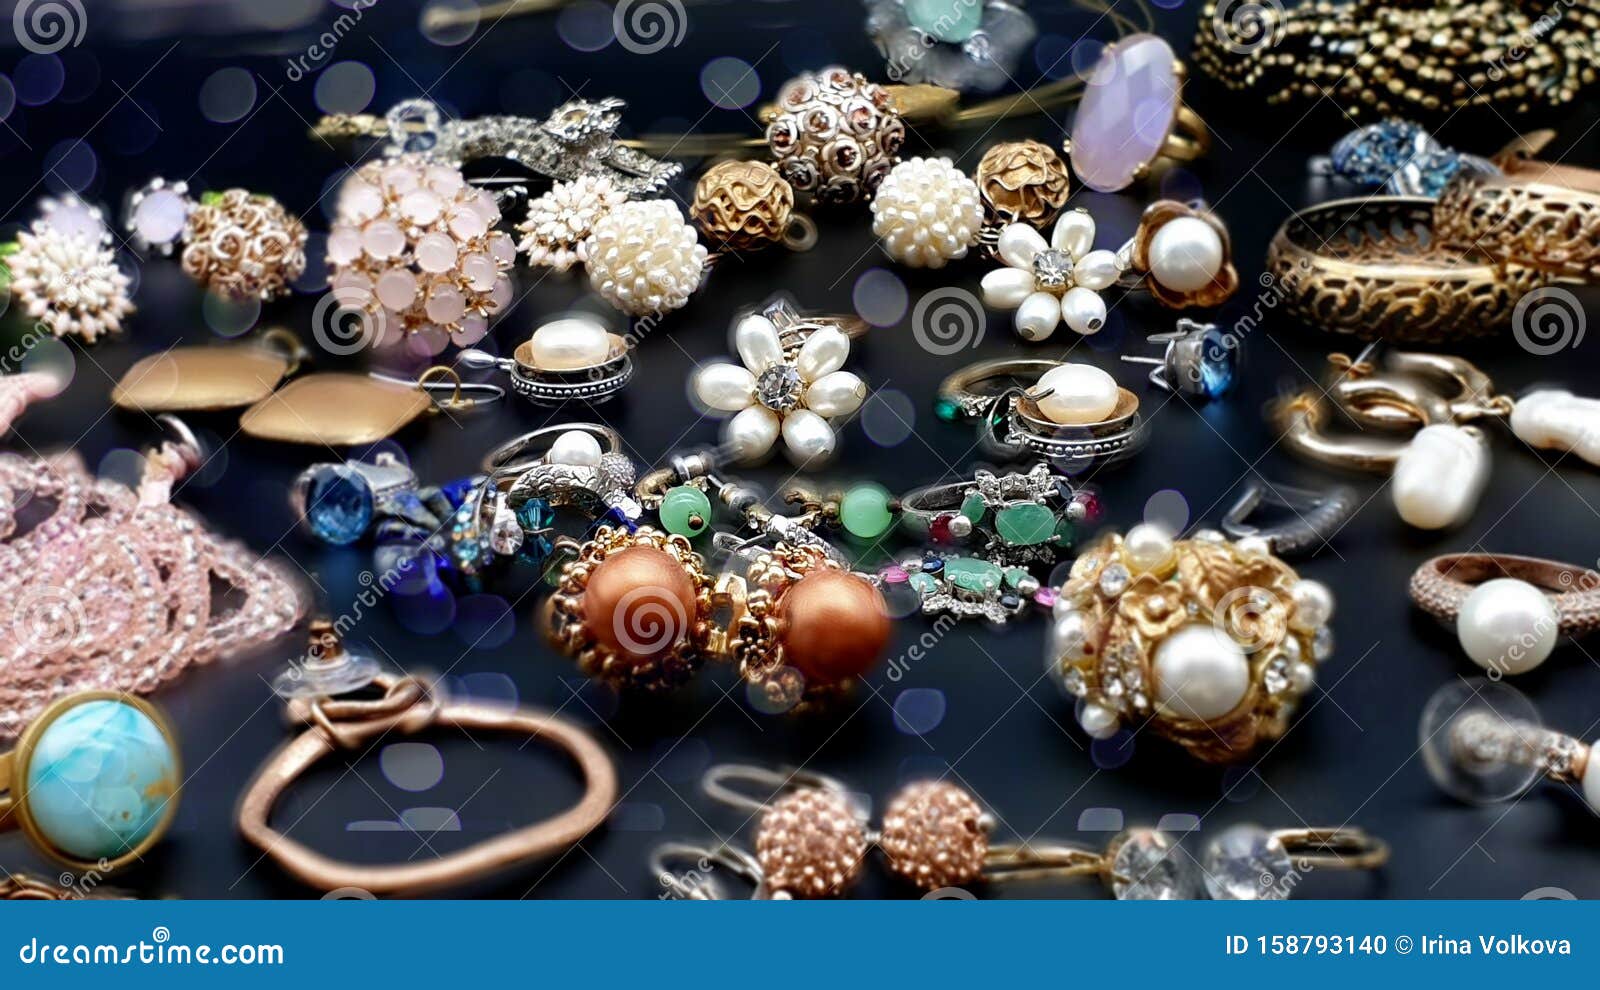 Details more than 79 black costume jewelry earrings best - 3tdesign.edu.vn